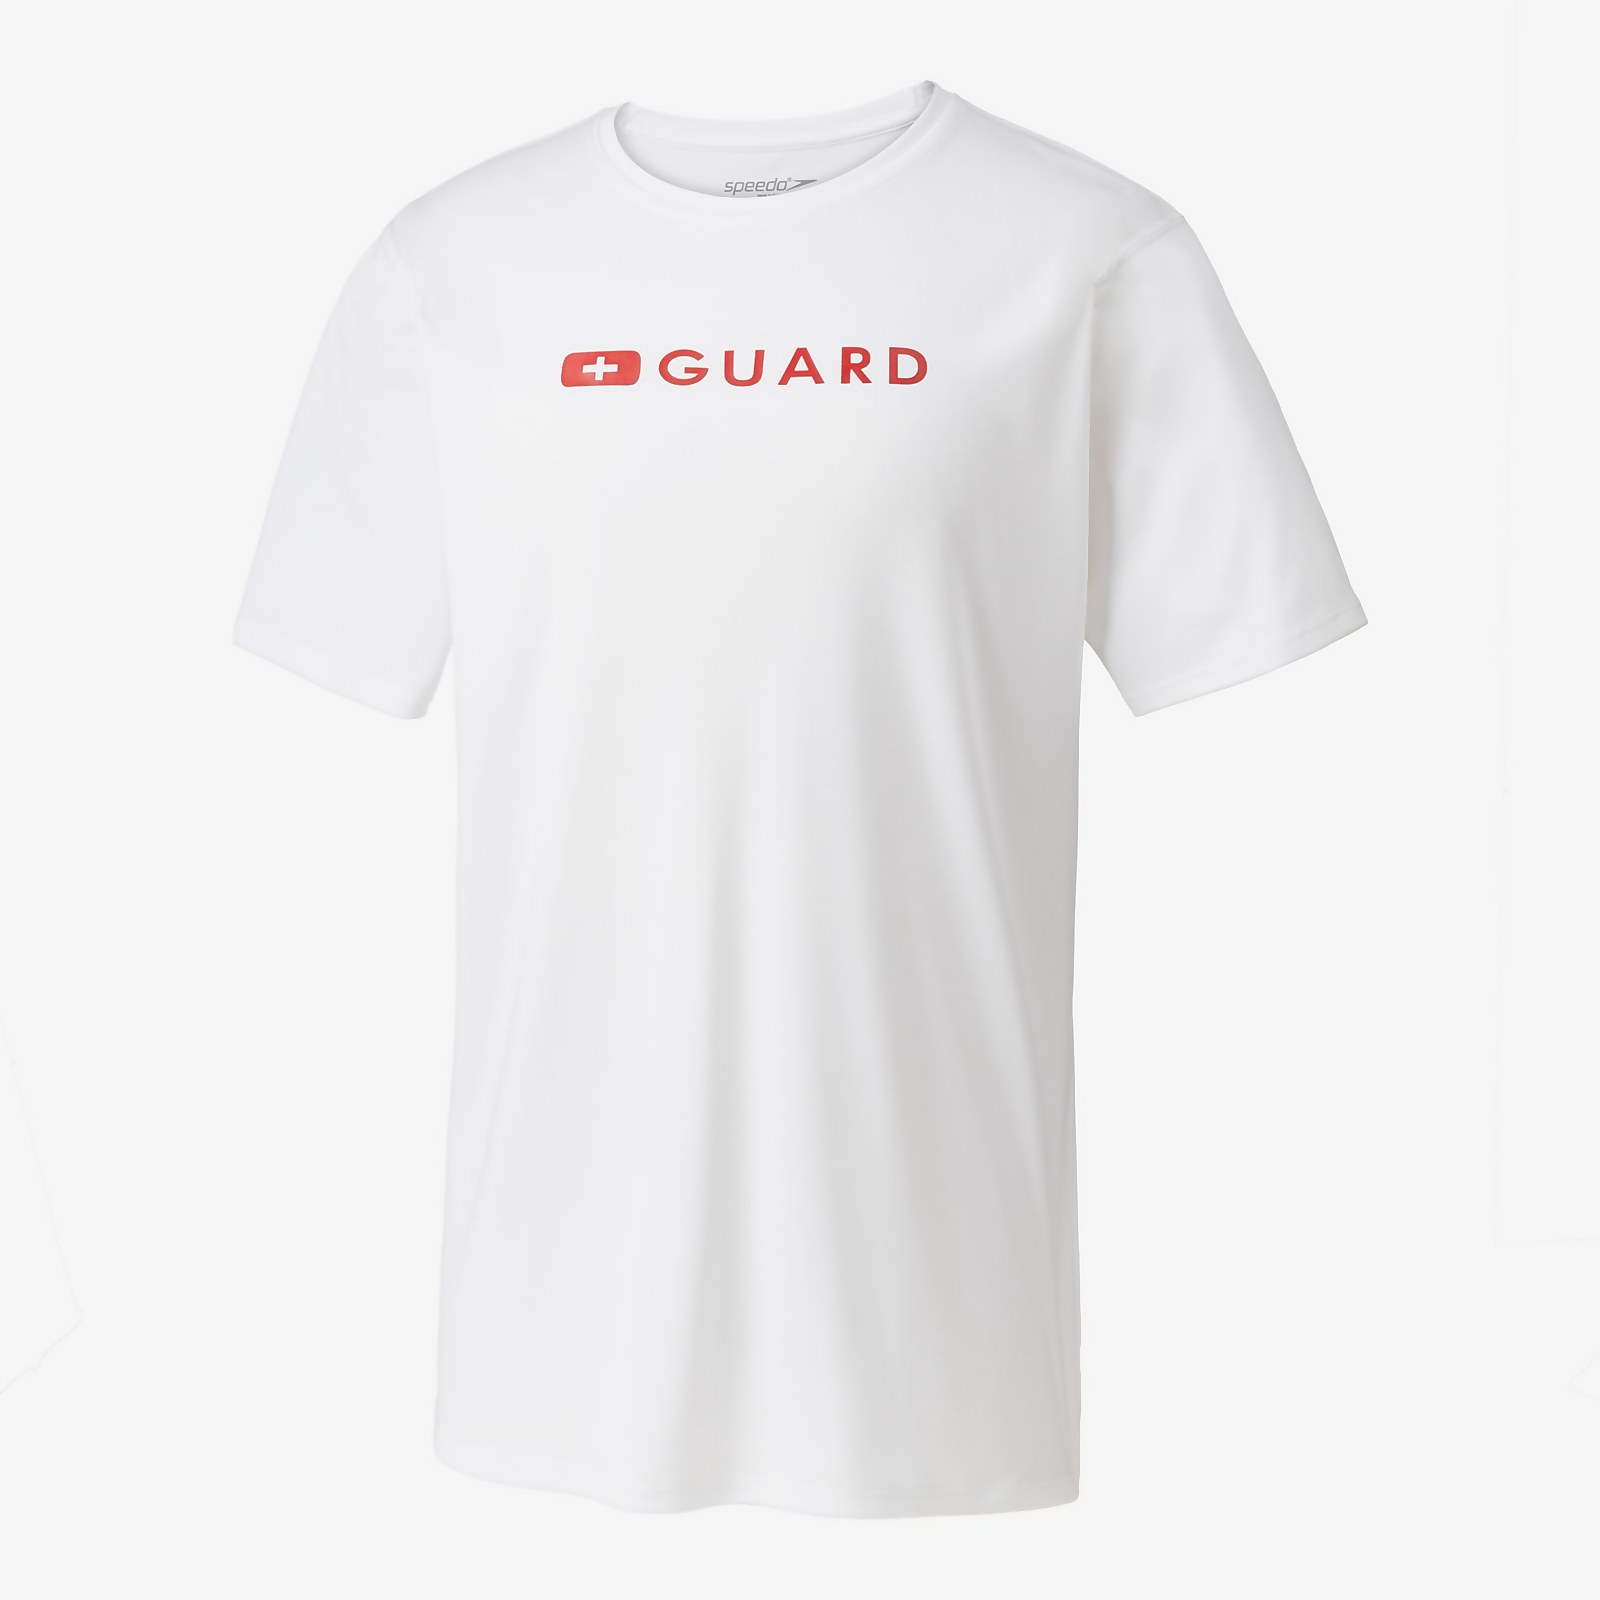 Speedo  Guard New Easy Short Sleeve Tee - S    : White